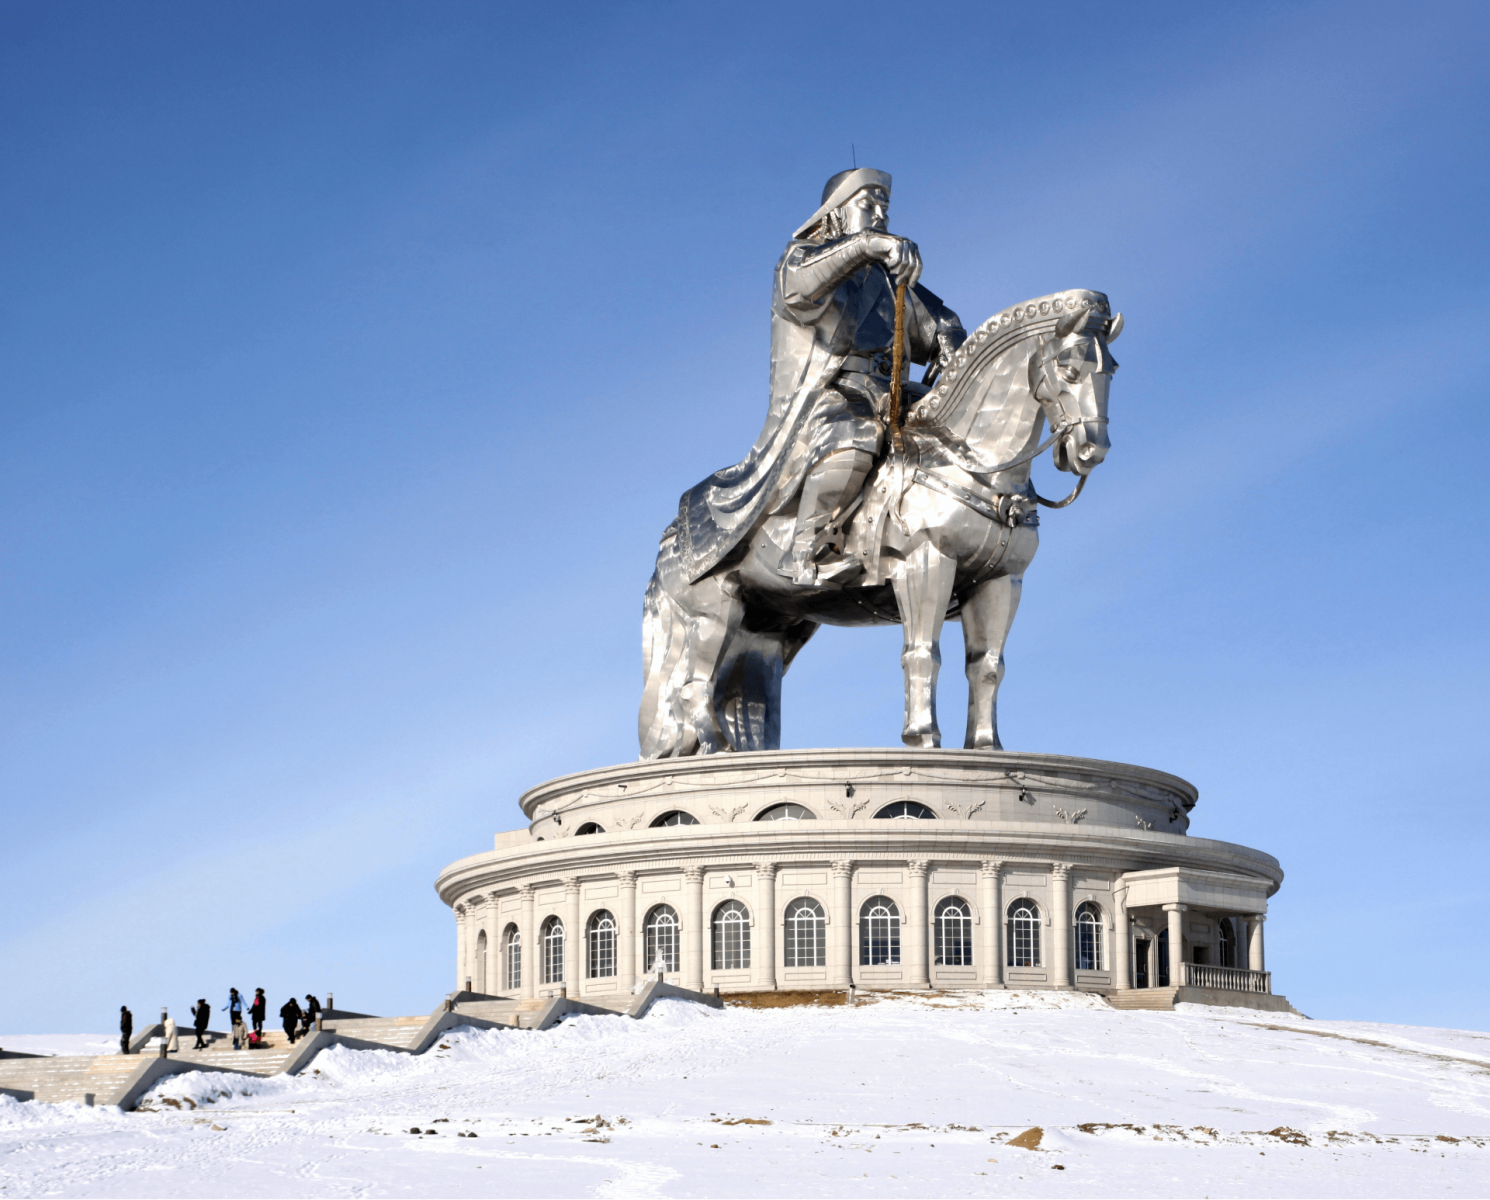 Chinggis Khaan Statue in Mongolia